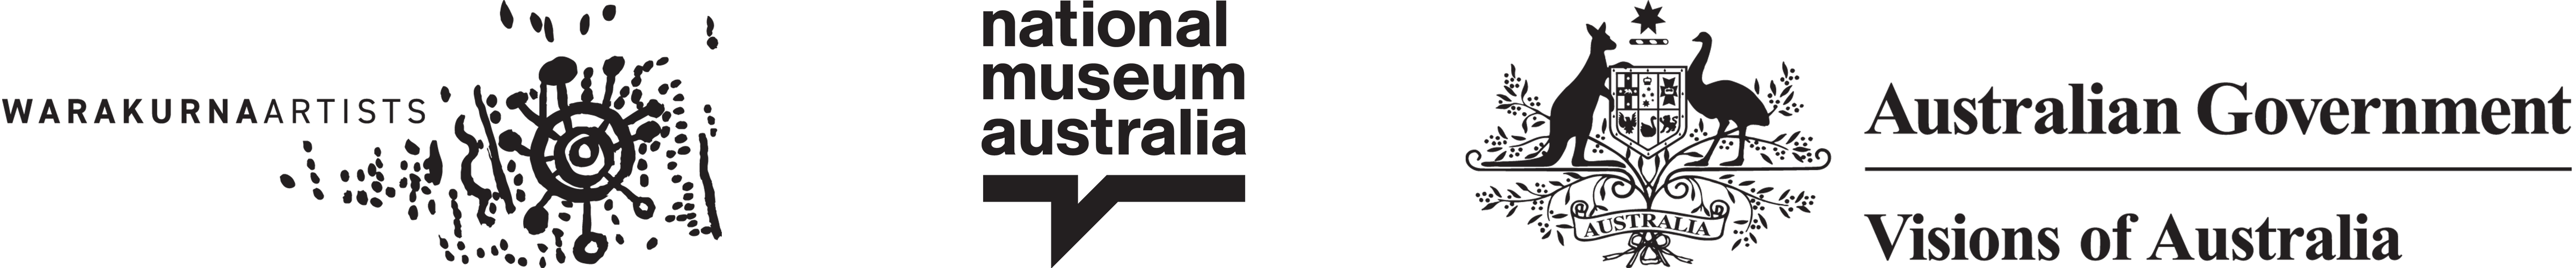 Logos of the Warakurna Artists, National Museum of Australia, and Visions of Australia